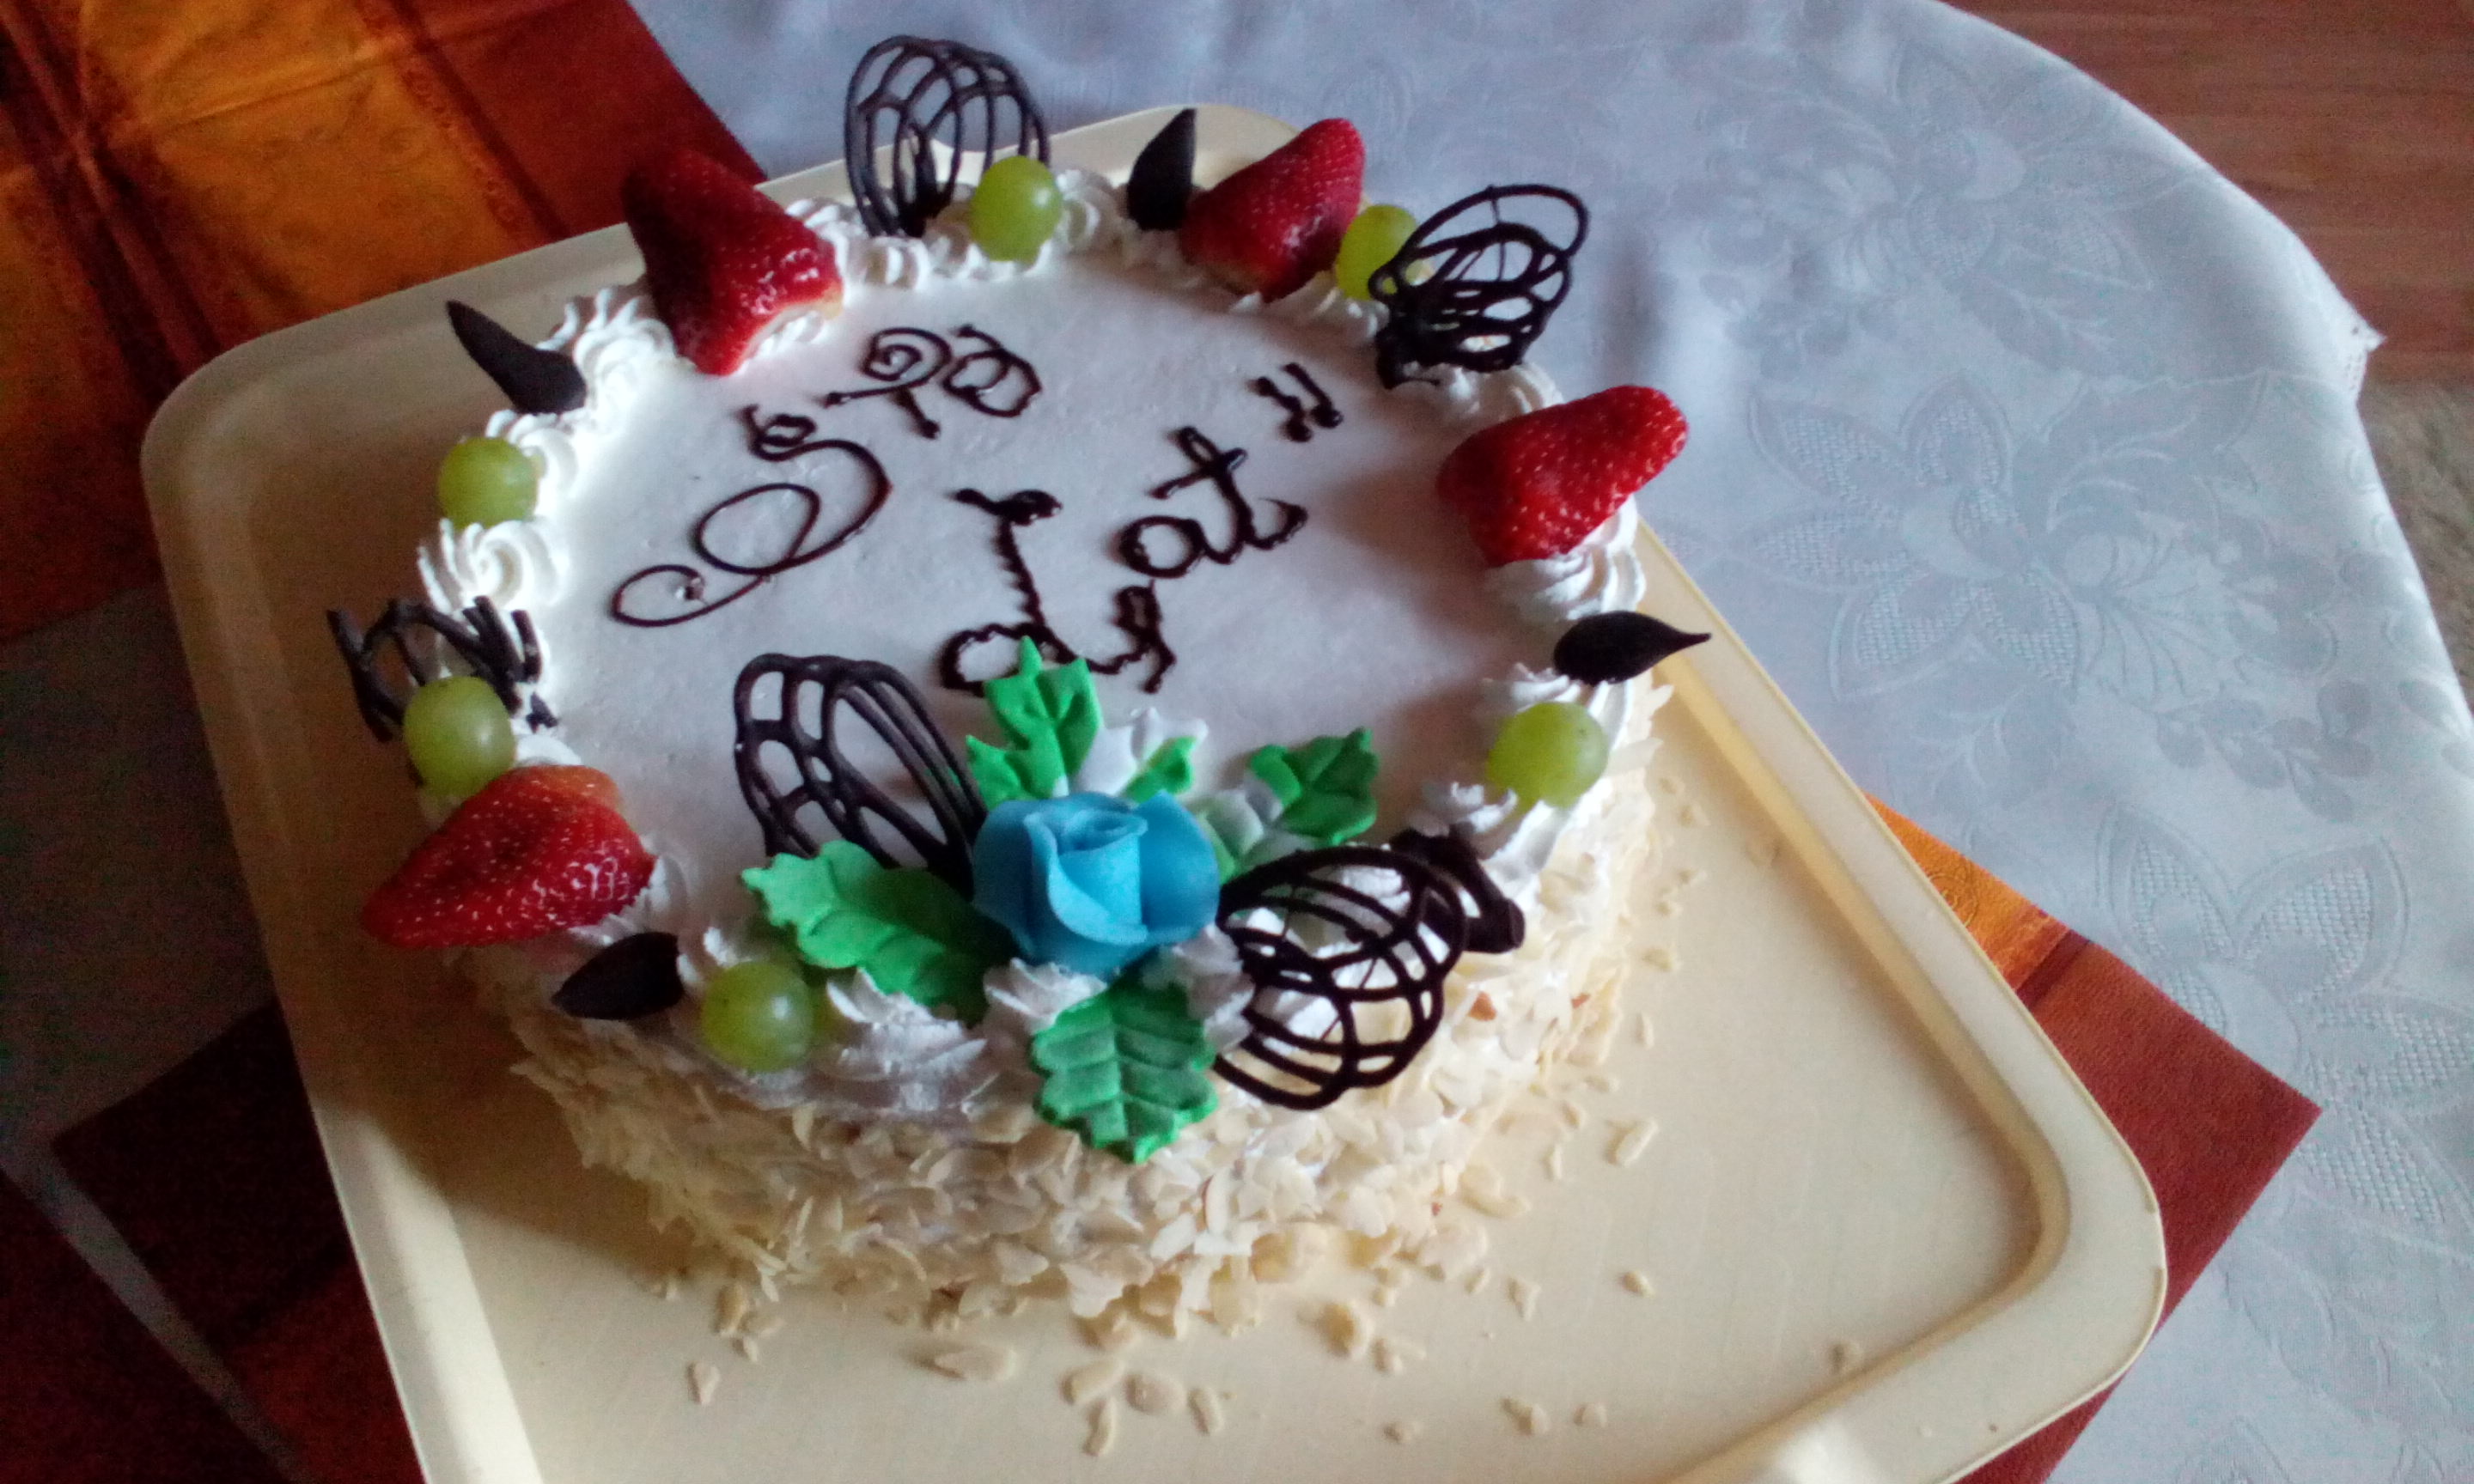 BirthdAy cake #1